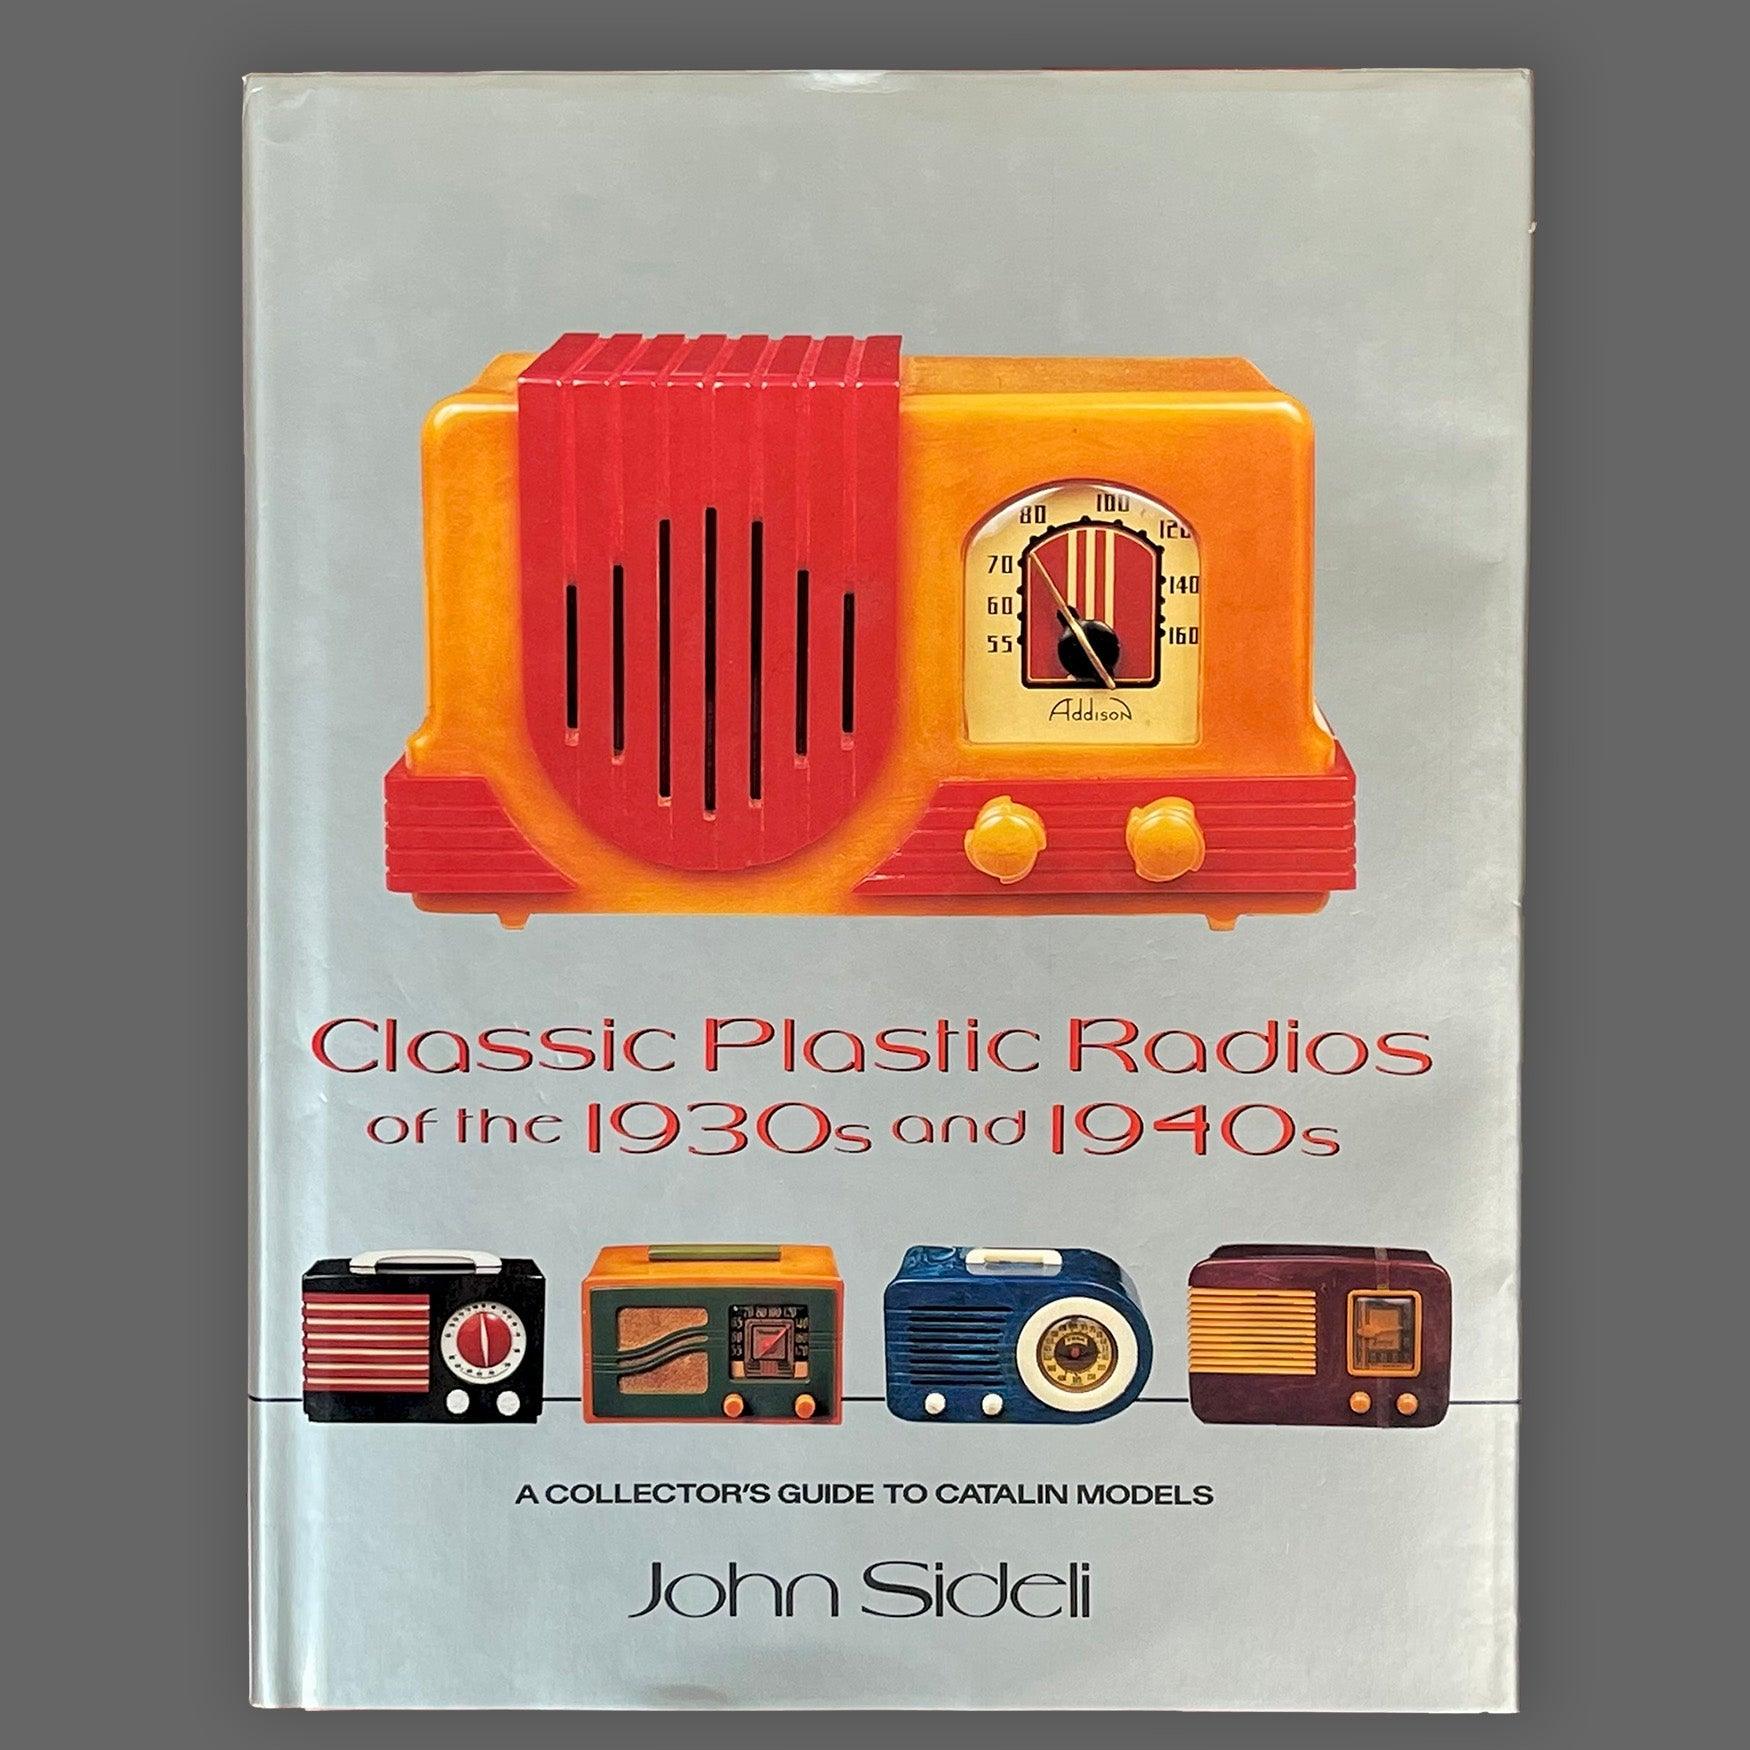 Catalin Radio Collector Books - Selling Catalin Radios and Art Deco Radios